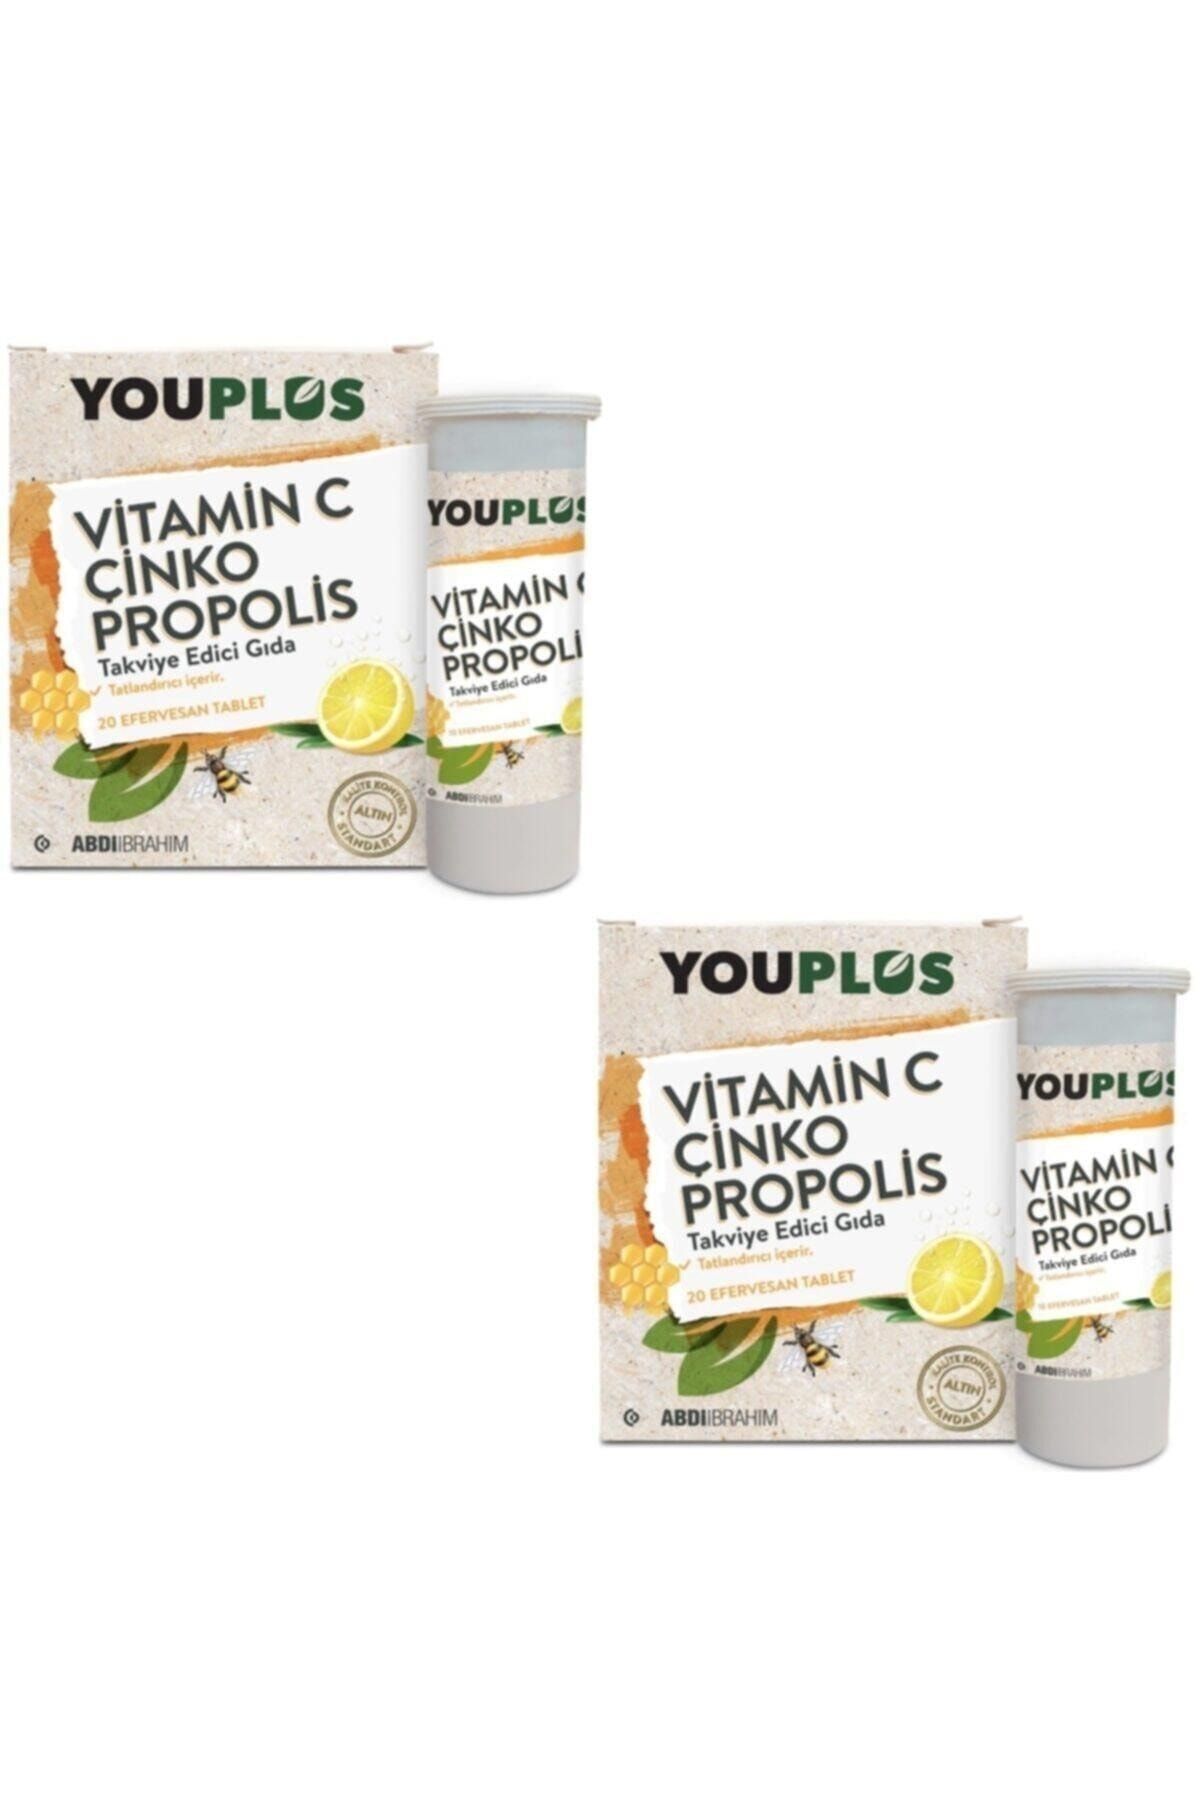 Youplus Youplus Vitamin C, Çinko, Propolis Efervesan Tablet 2 Adet